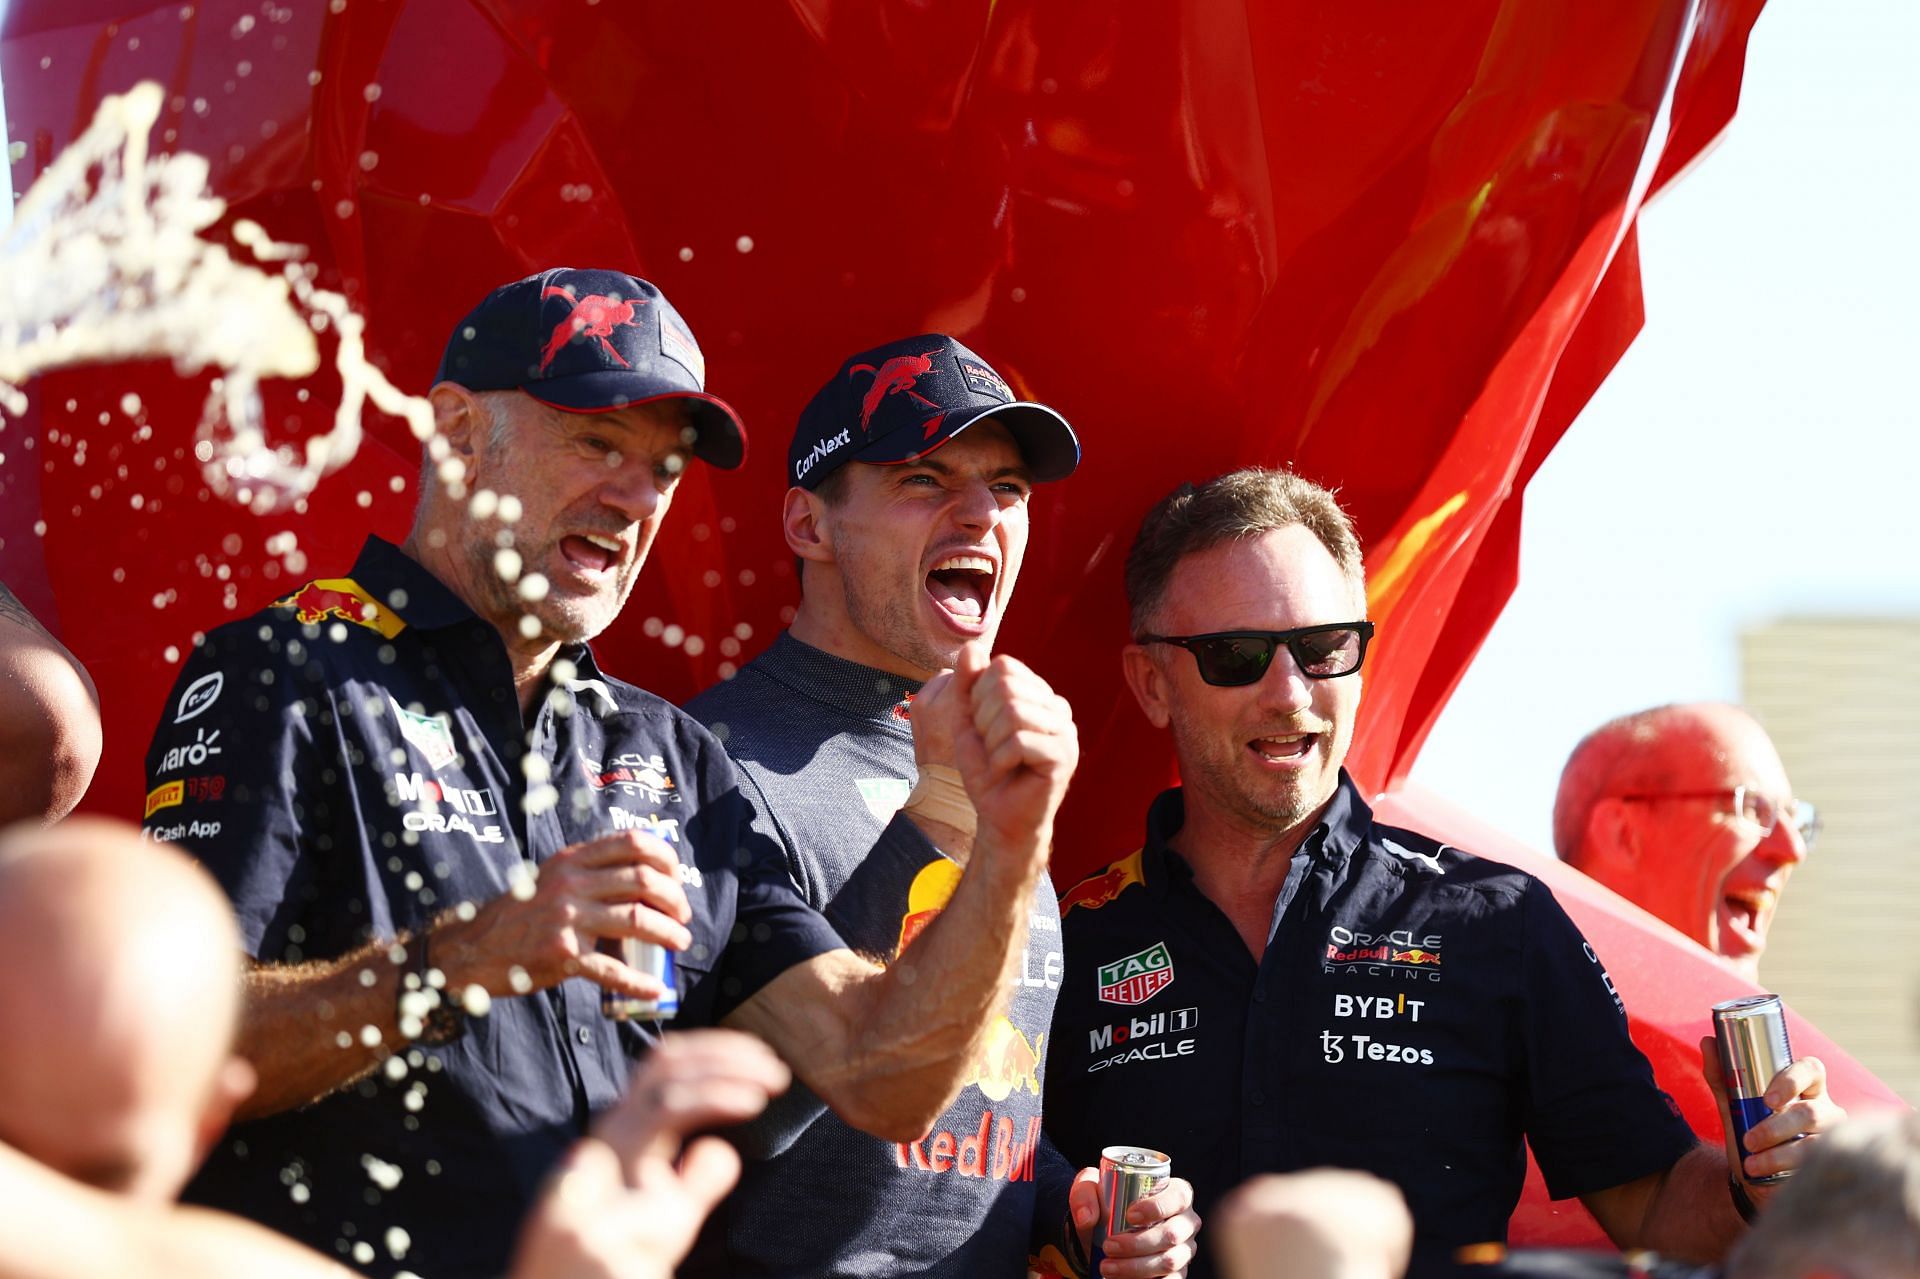 F1 Grand Prix of France - The Red Bull team celebrate in France.